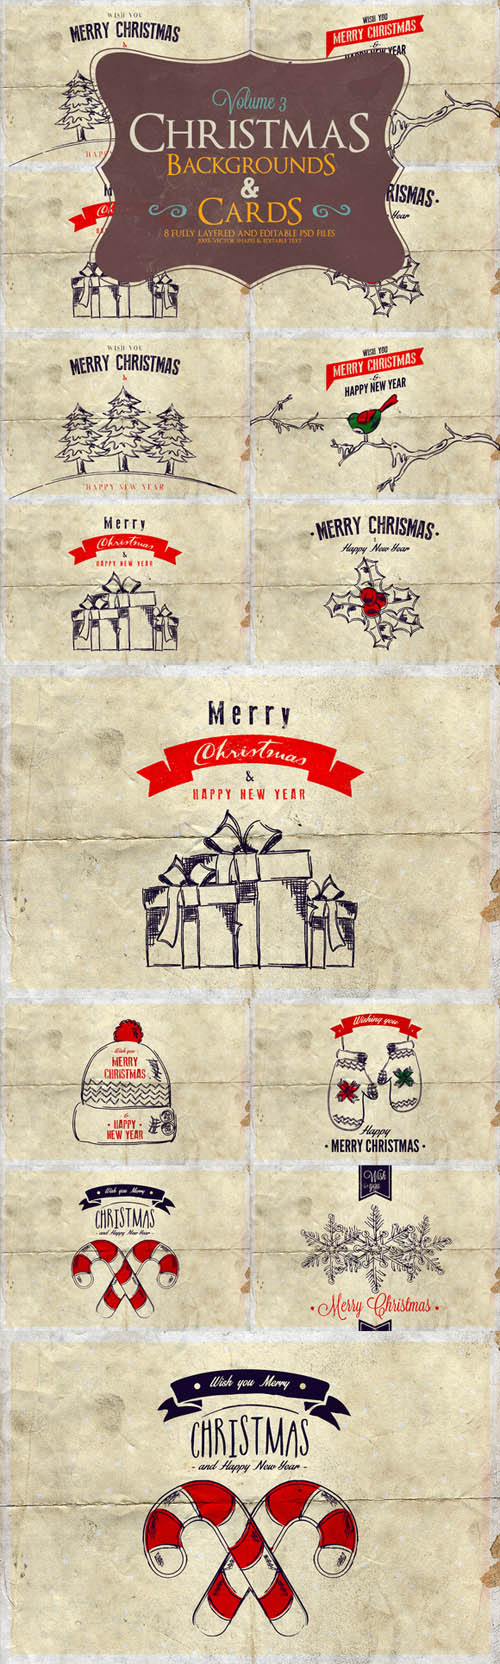 CreativeMarket - Christmas Background & Cards Vol.3 113240